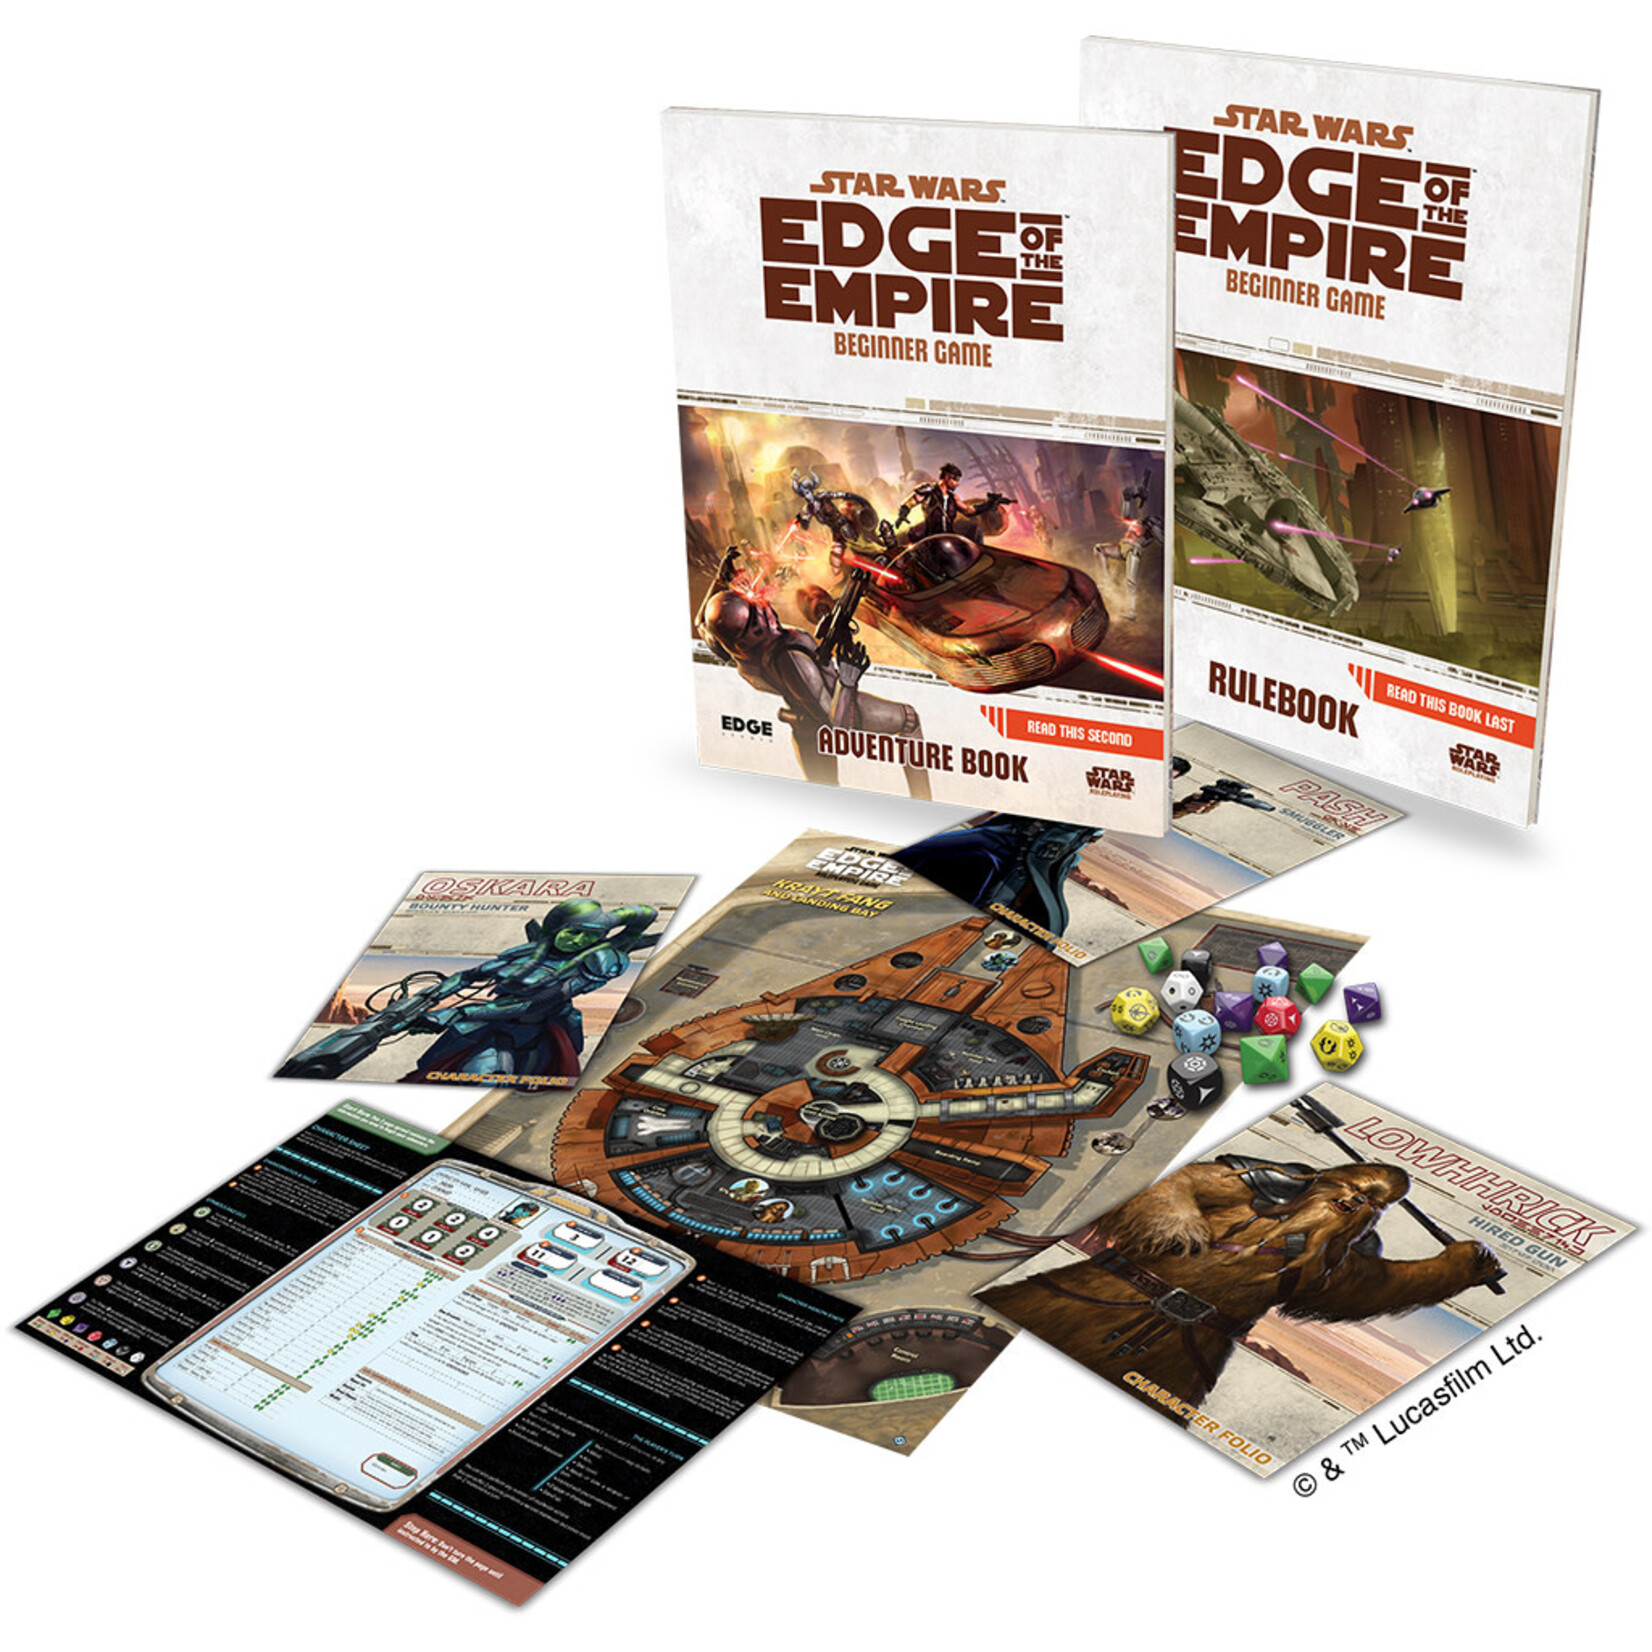 Edge Star Wars: Edge of the Empire Beginner Game